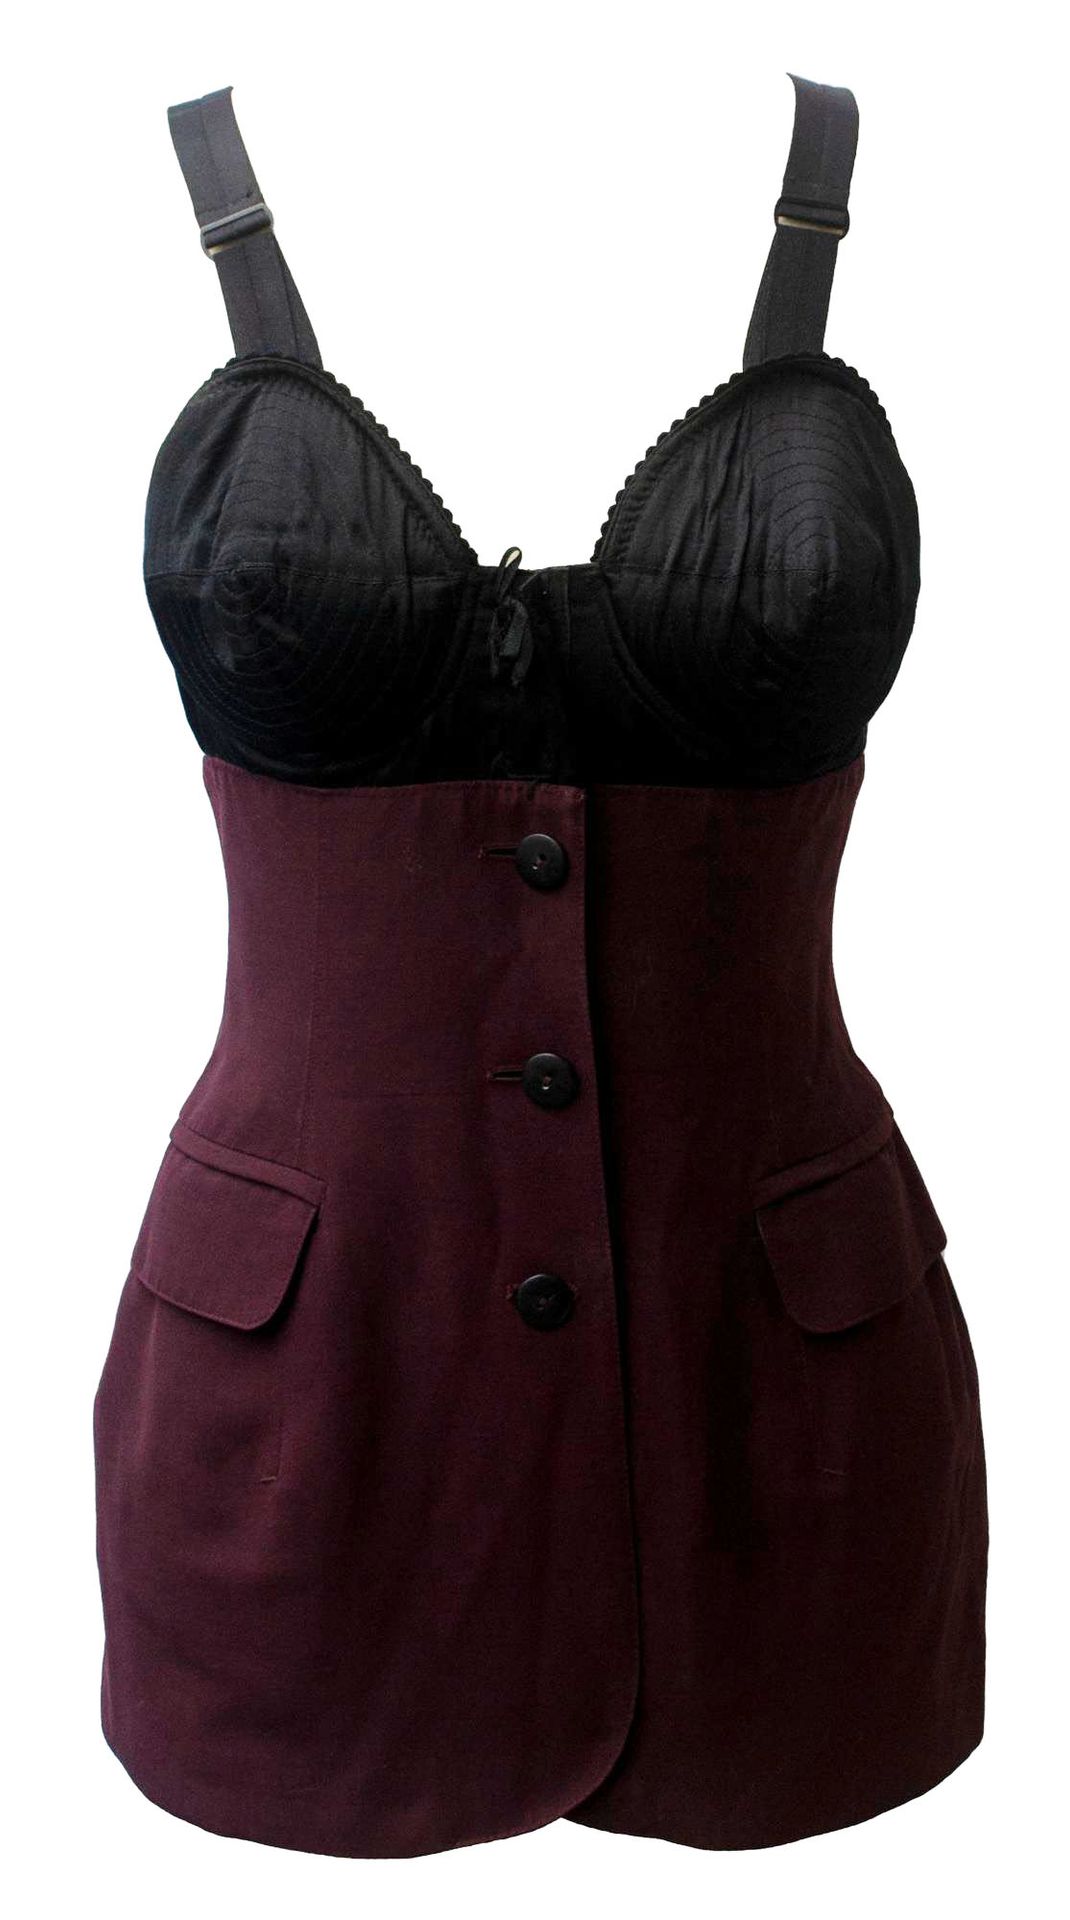 Null Jean Paul Gaultier

毛衣外套



描述。

茄子色的丝绸用于这件上衣，夹克的经典剪裁细节与被称为 "锥形胸罩 "的绗缝内衣混合。&hellip;